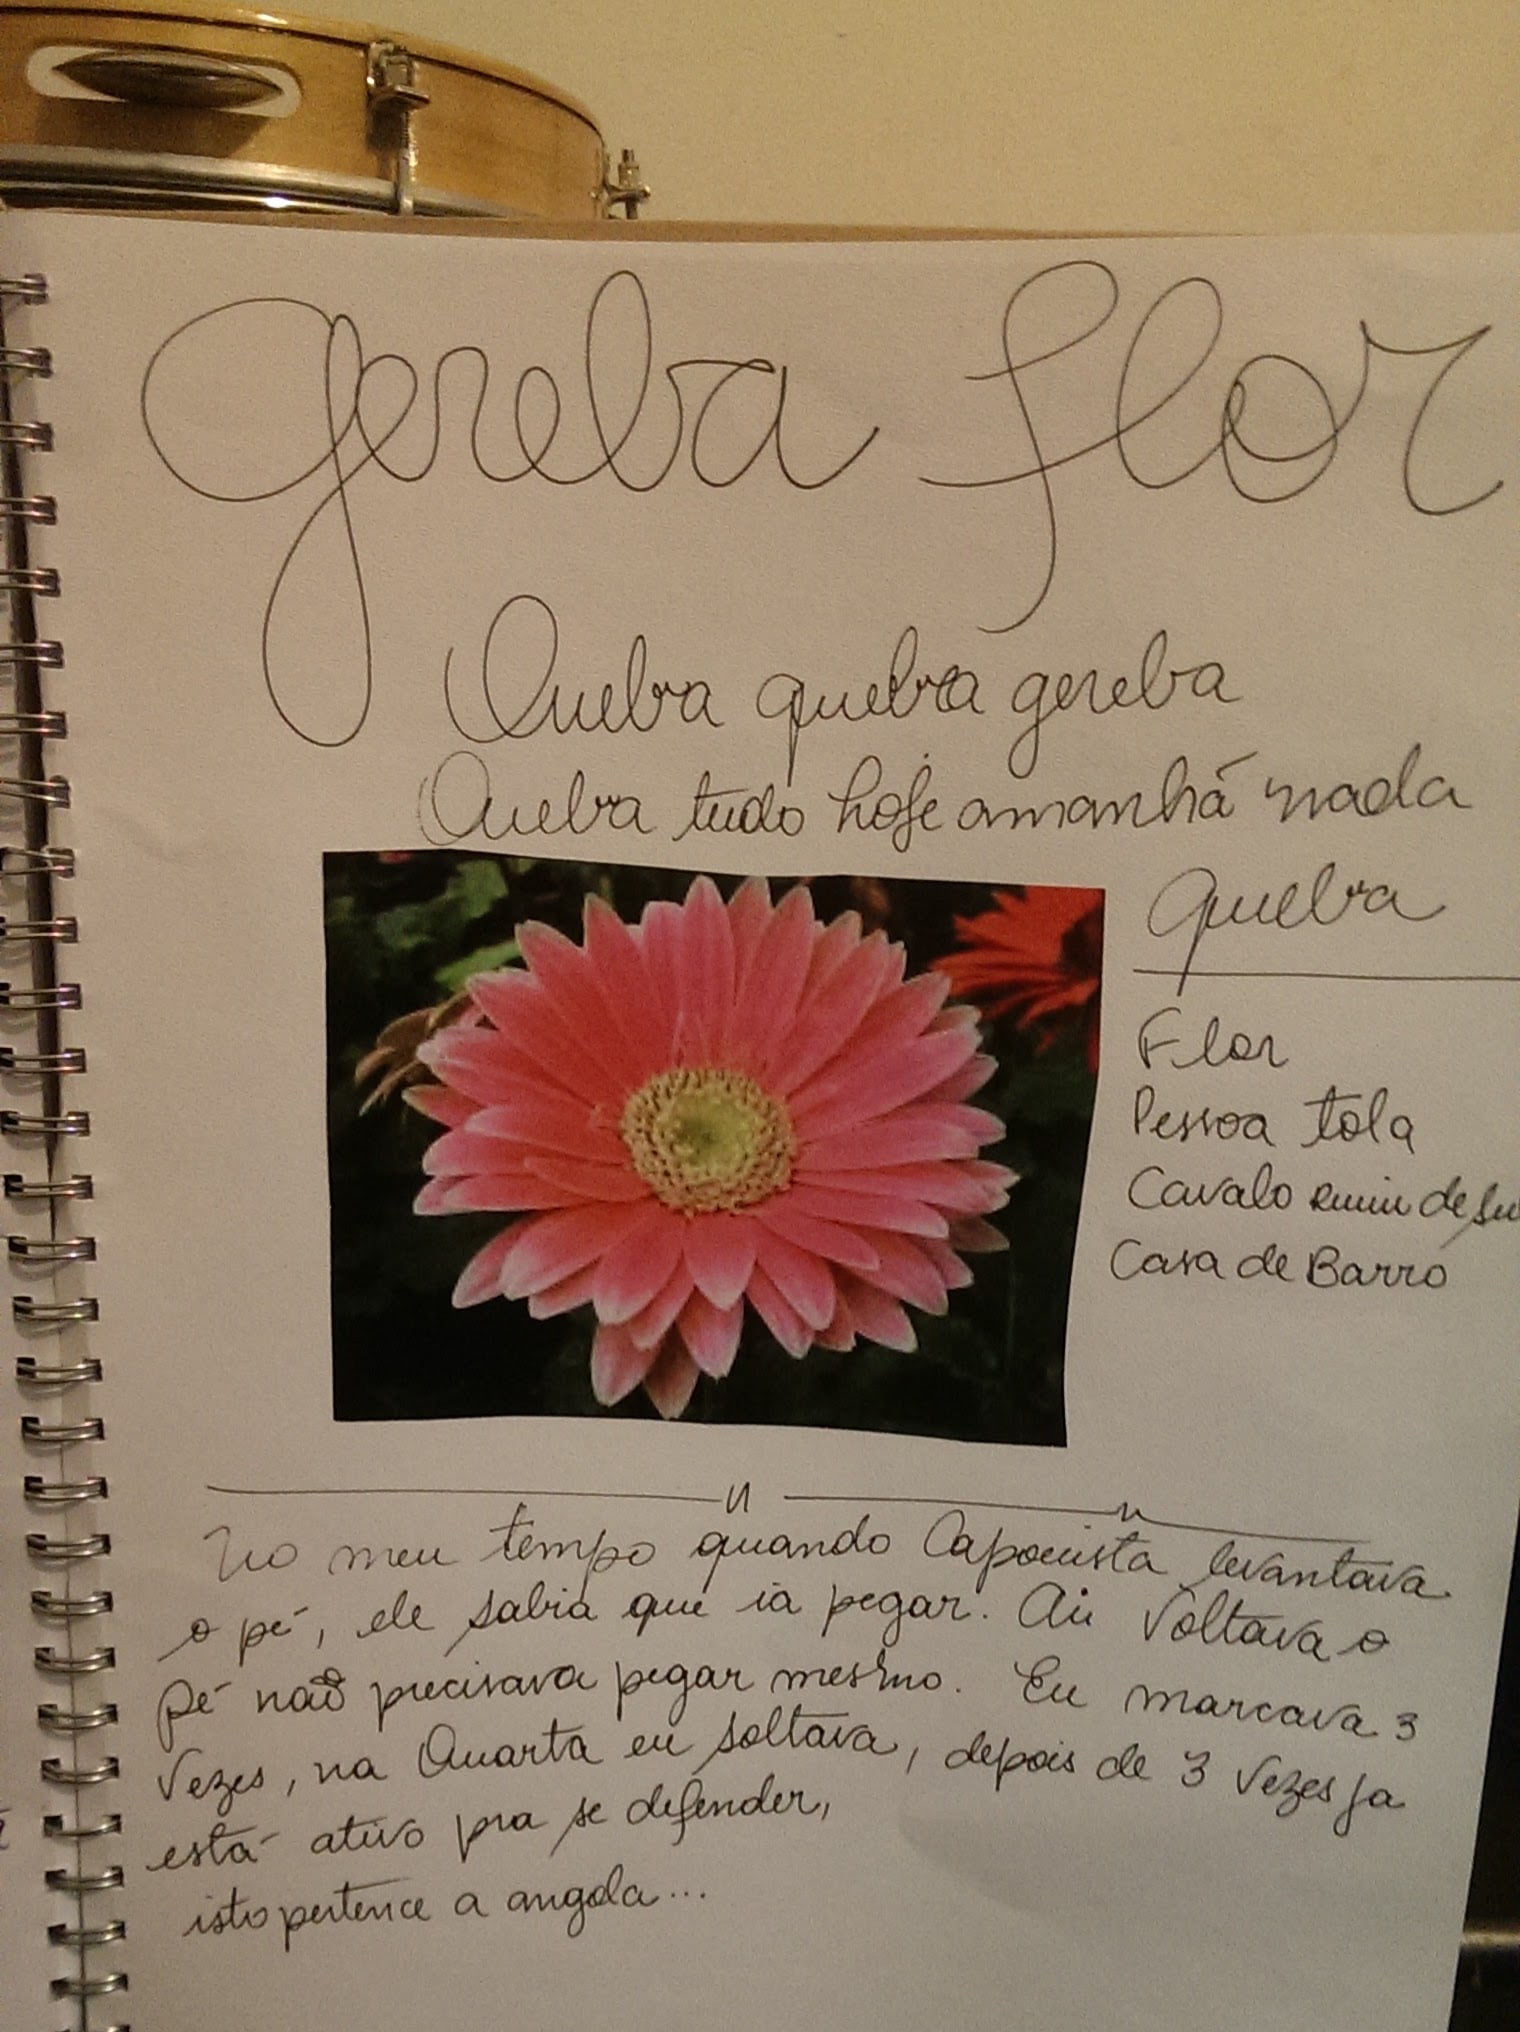 Gereba has various meanings: flower, foolish person, untamable horse, mud hut.